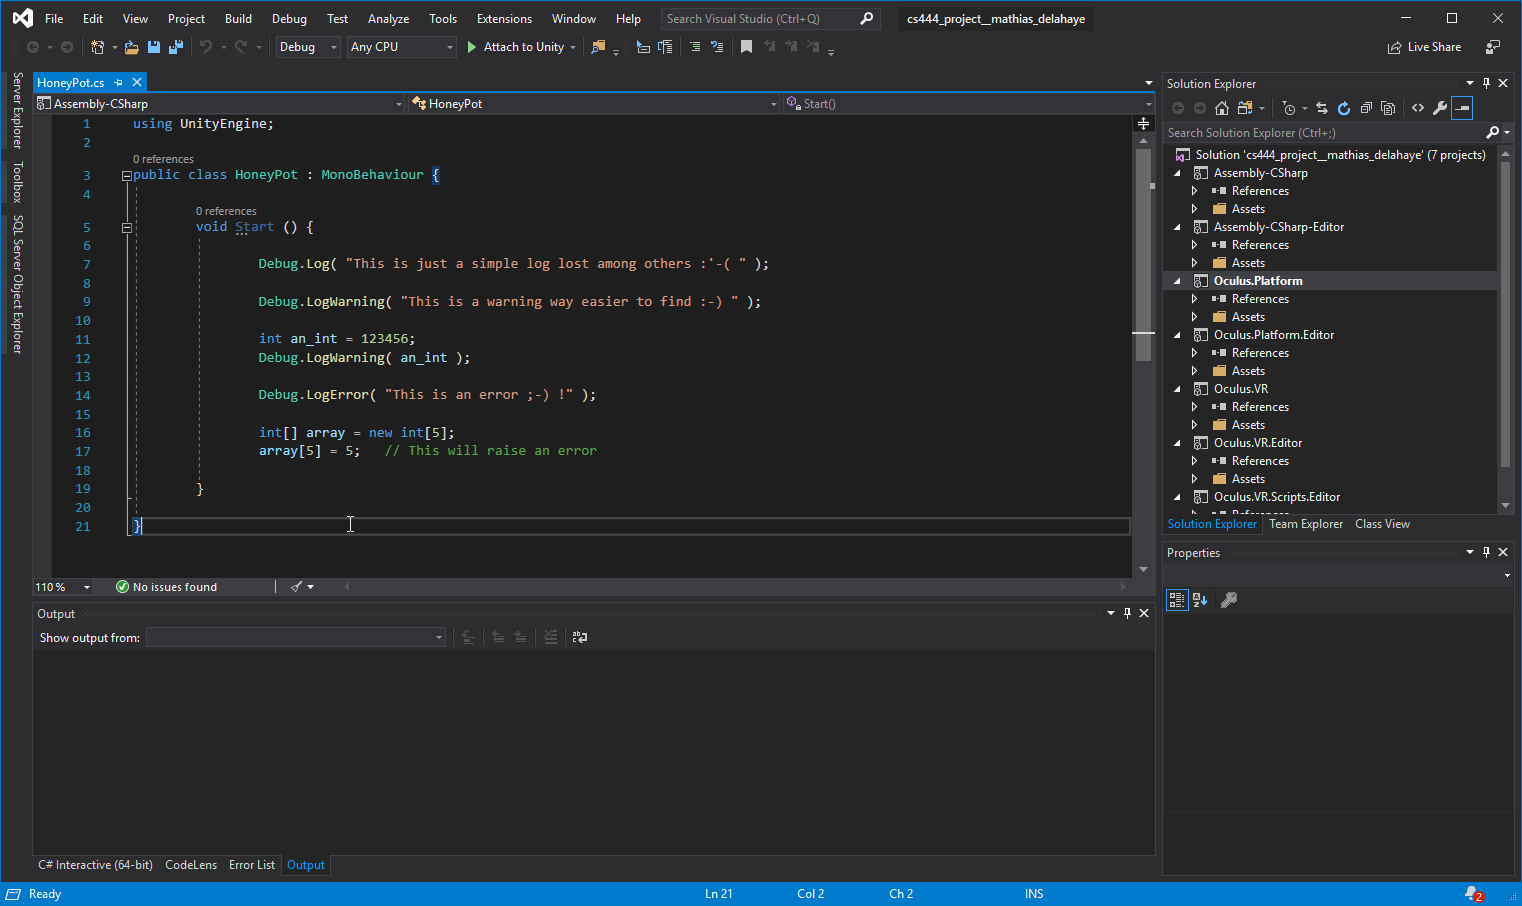 Edit script with Visual Studio